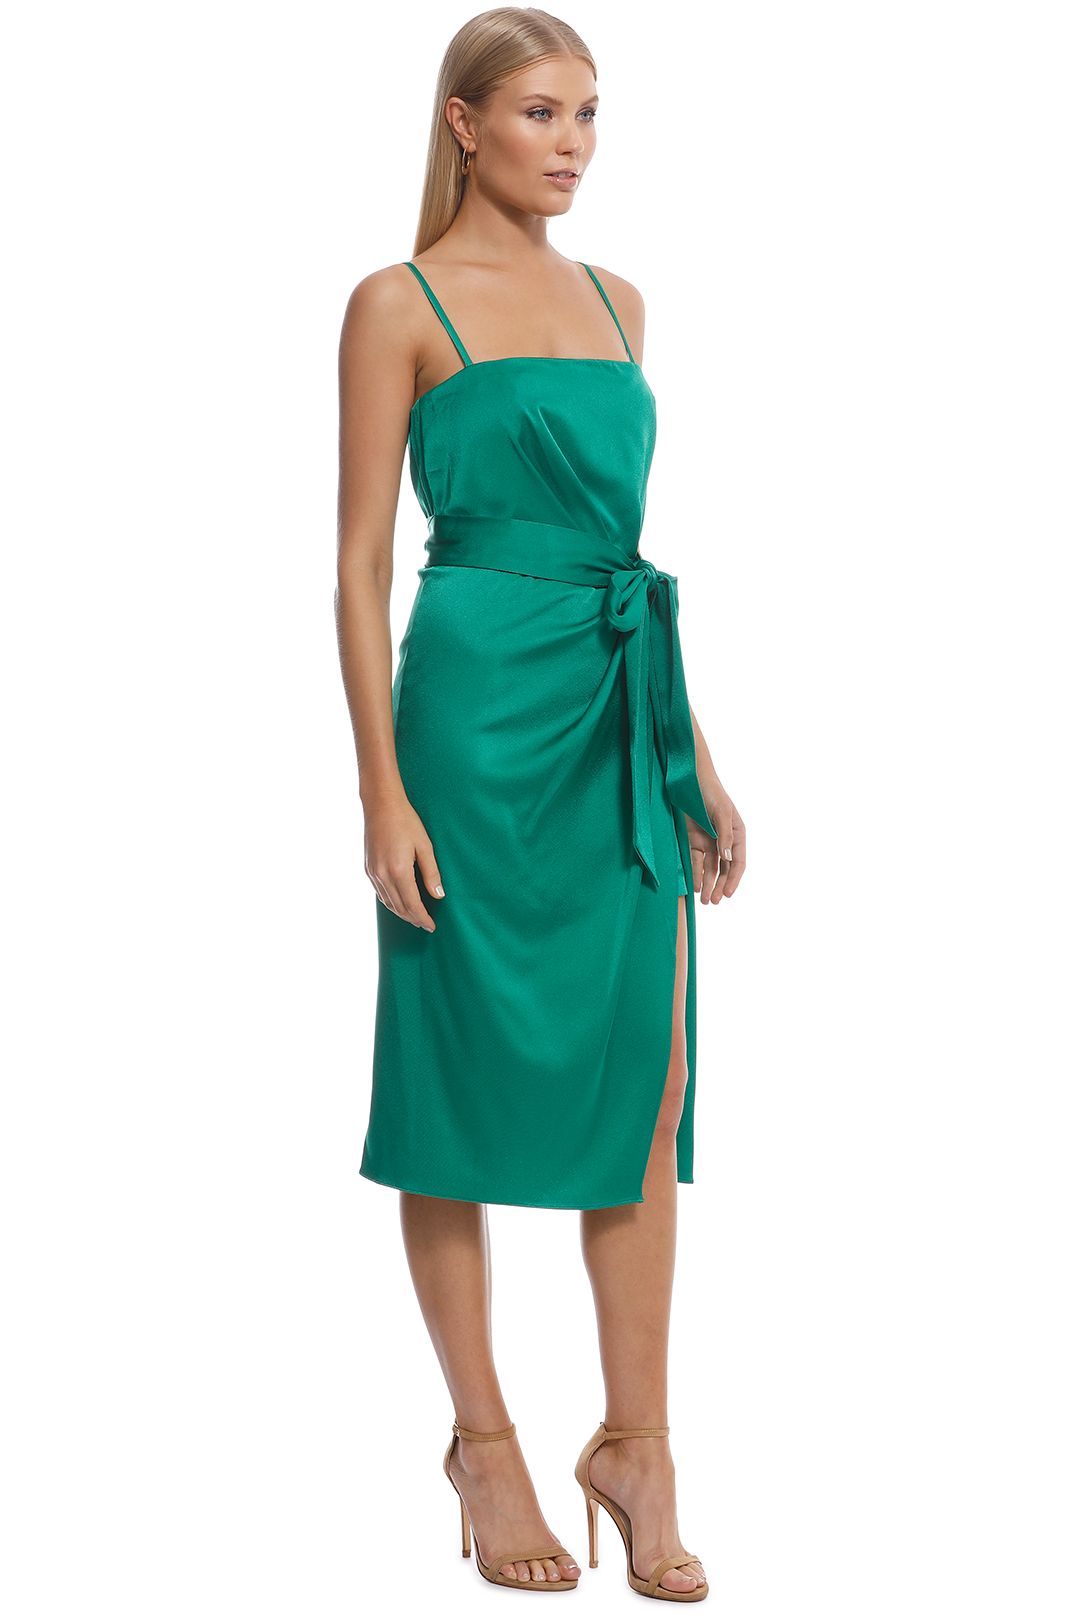 Kookai - Toni Dress - Emerald - Side